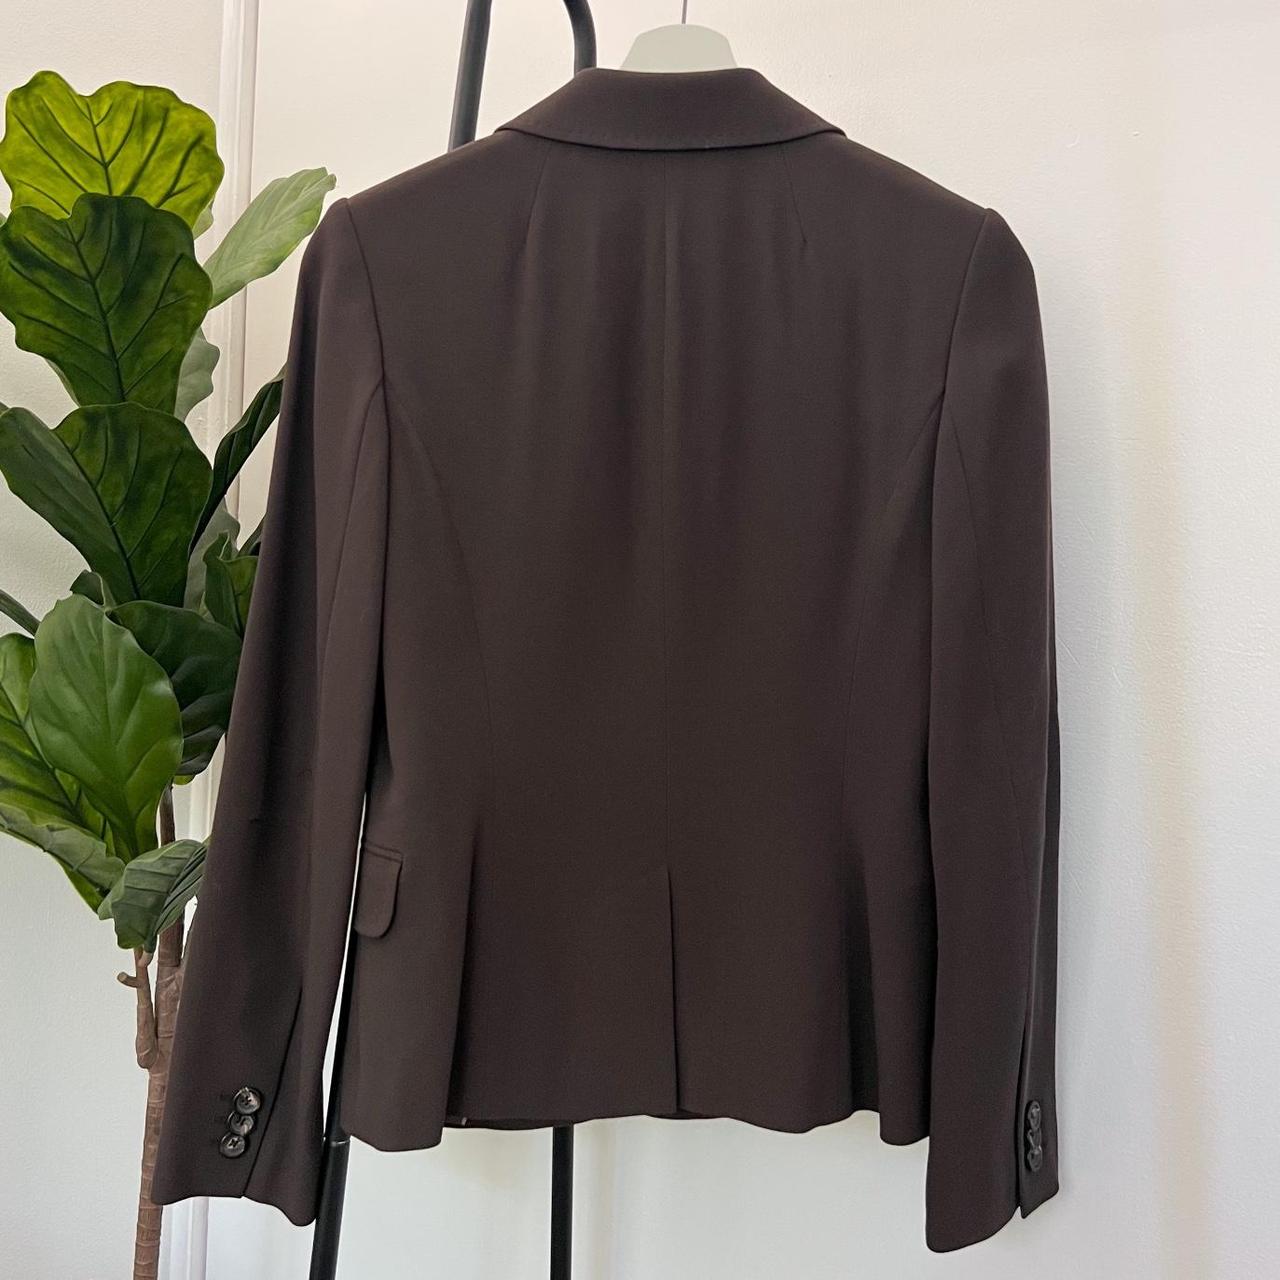 Product Image 2 - Brown Wool Blend Blazer

🤎 brown